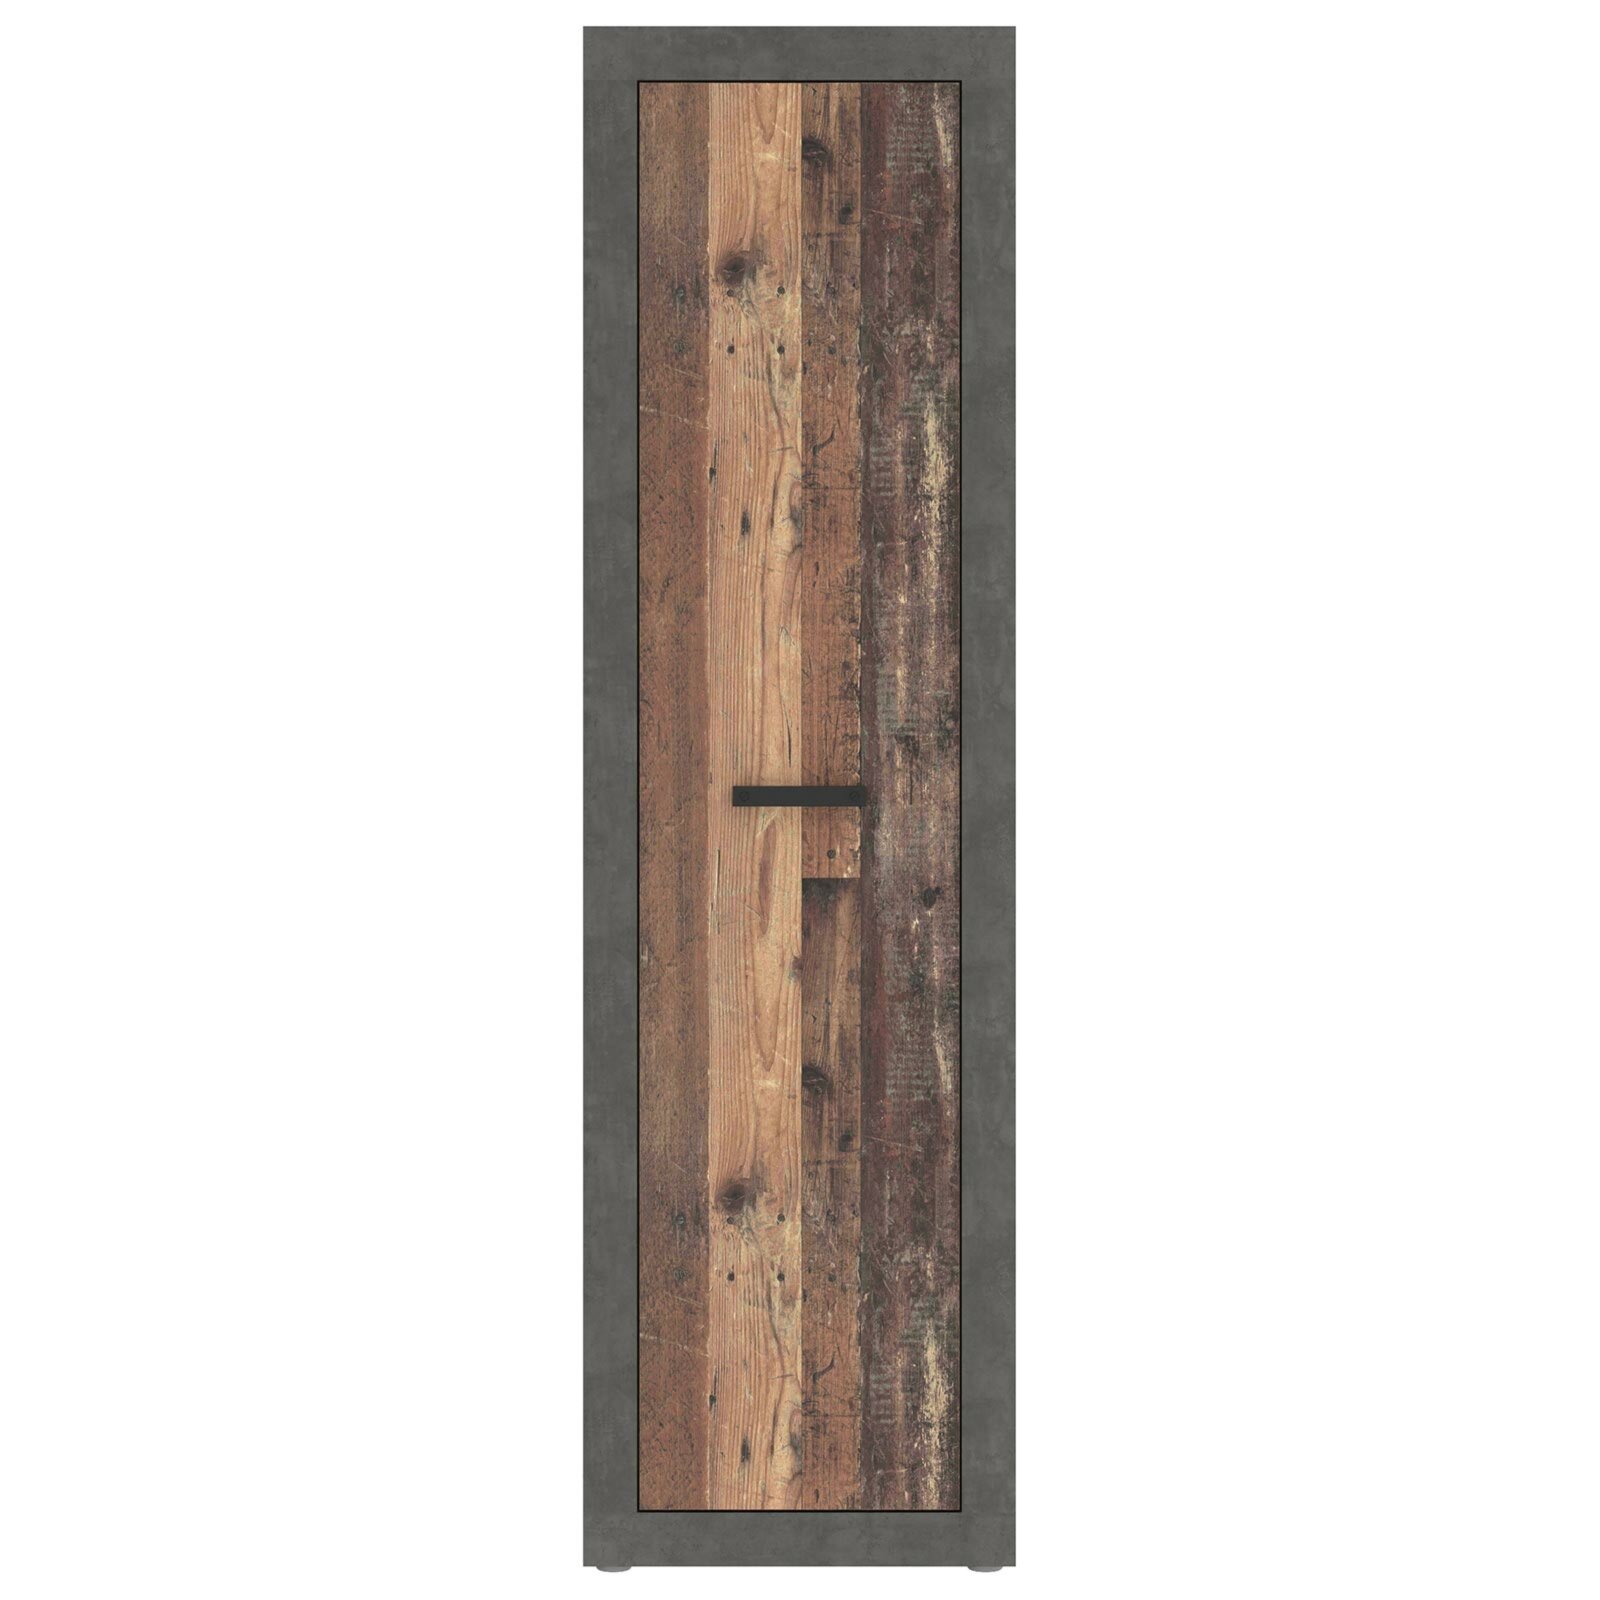 Garderobenschrank - Old bei Vintage Wood kaufen - Online ROLLER Beton-Optik 